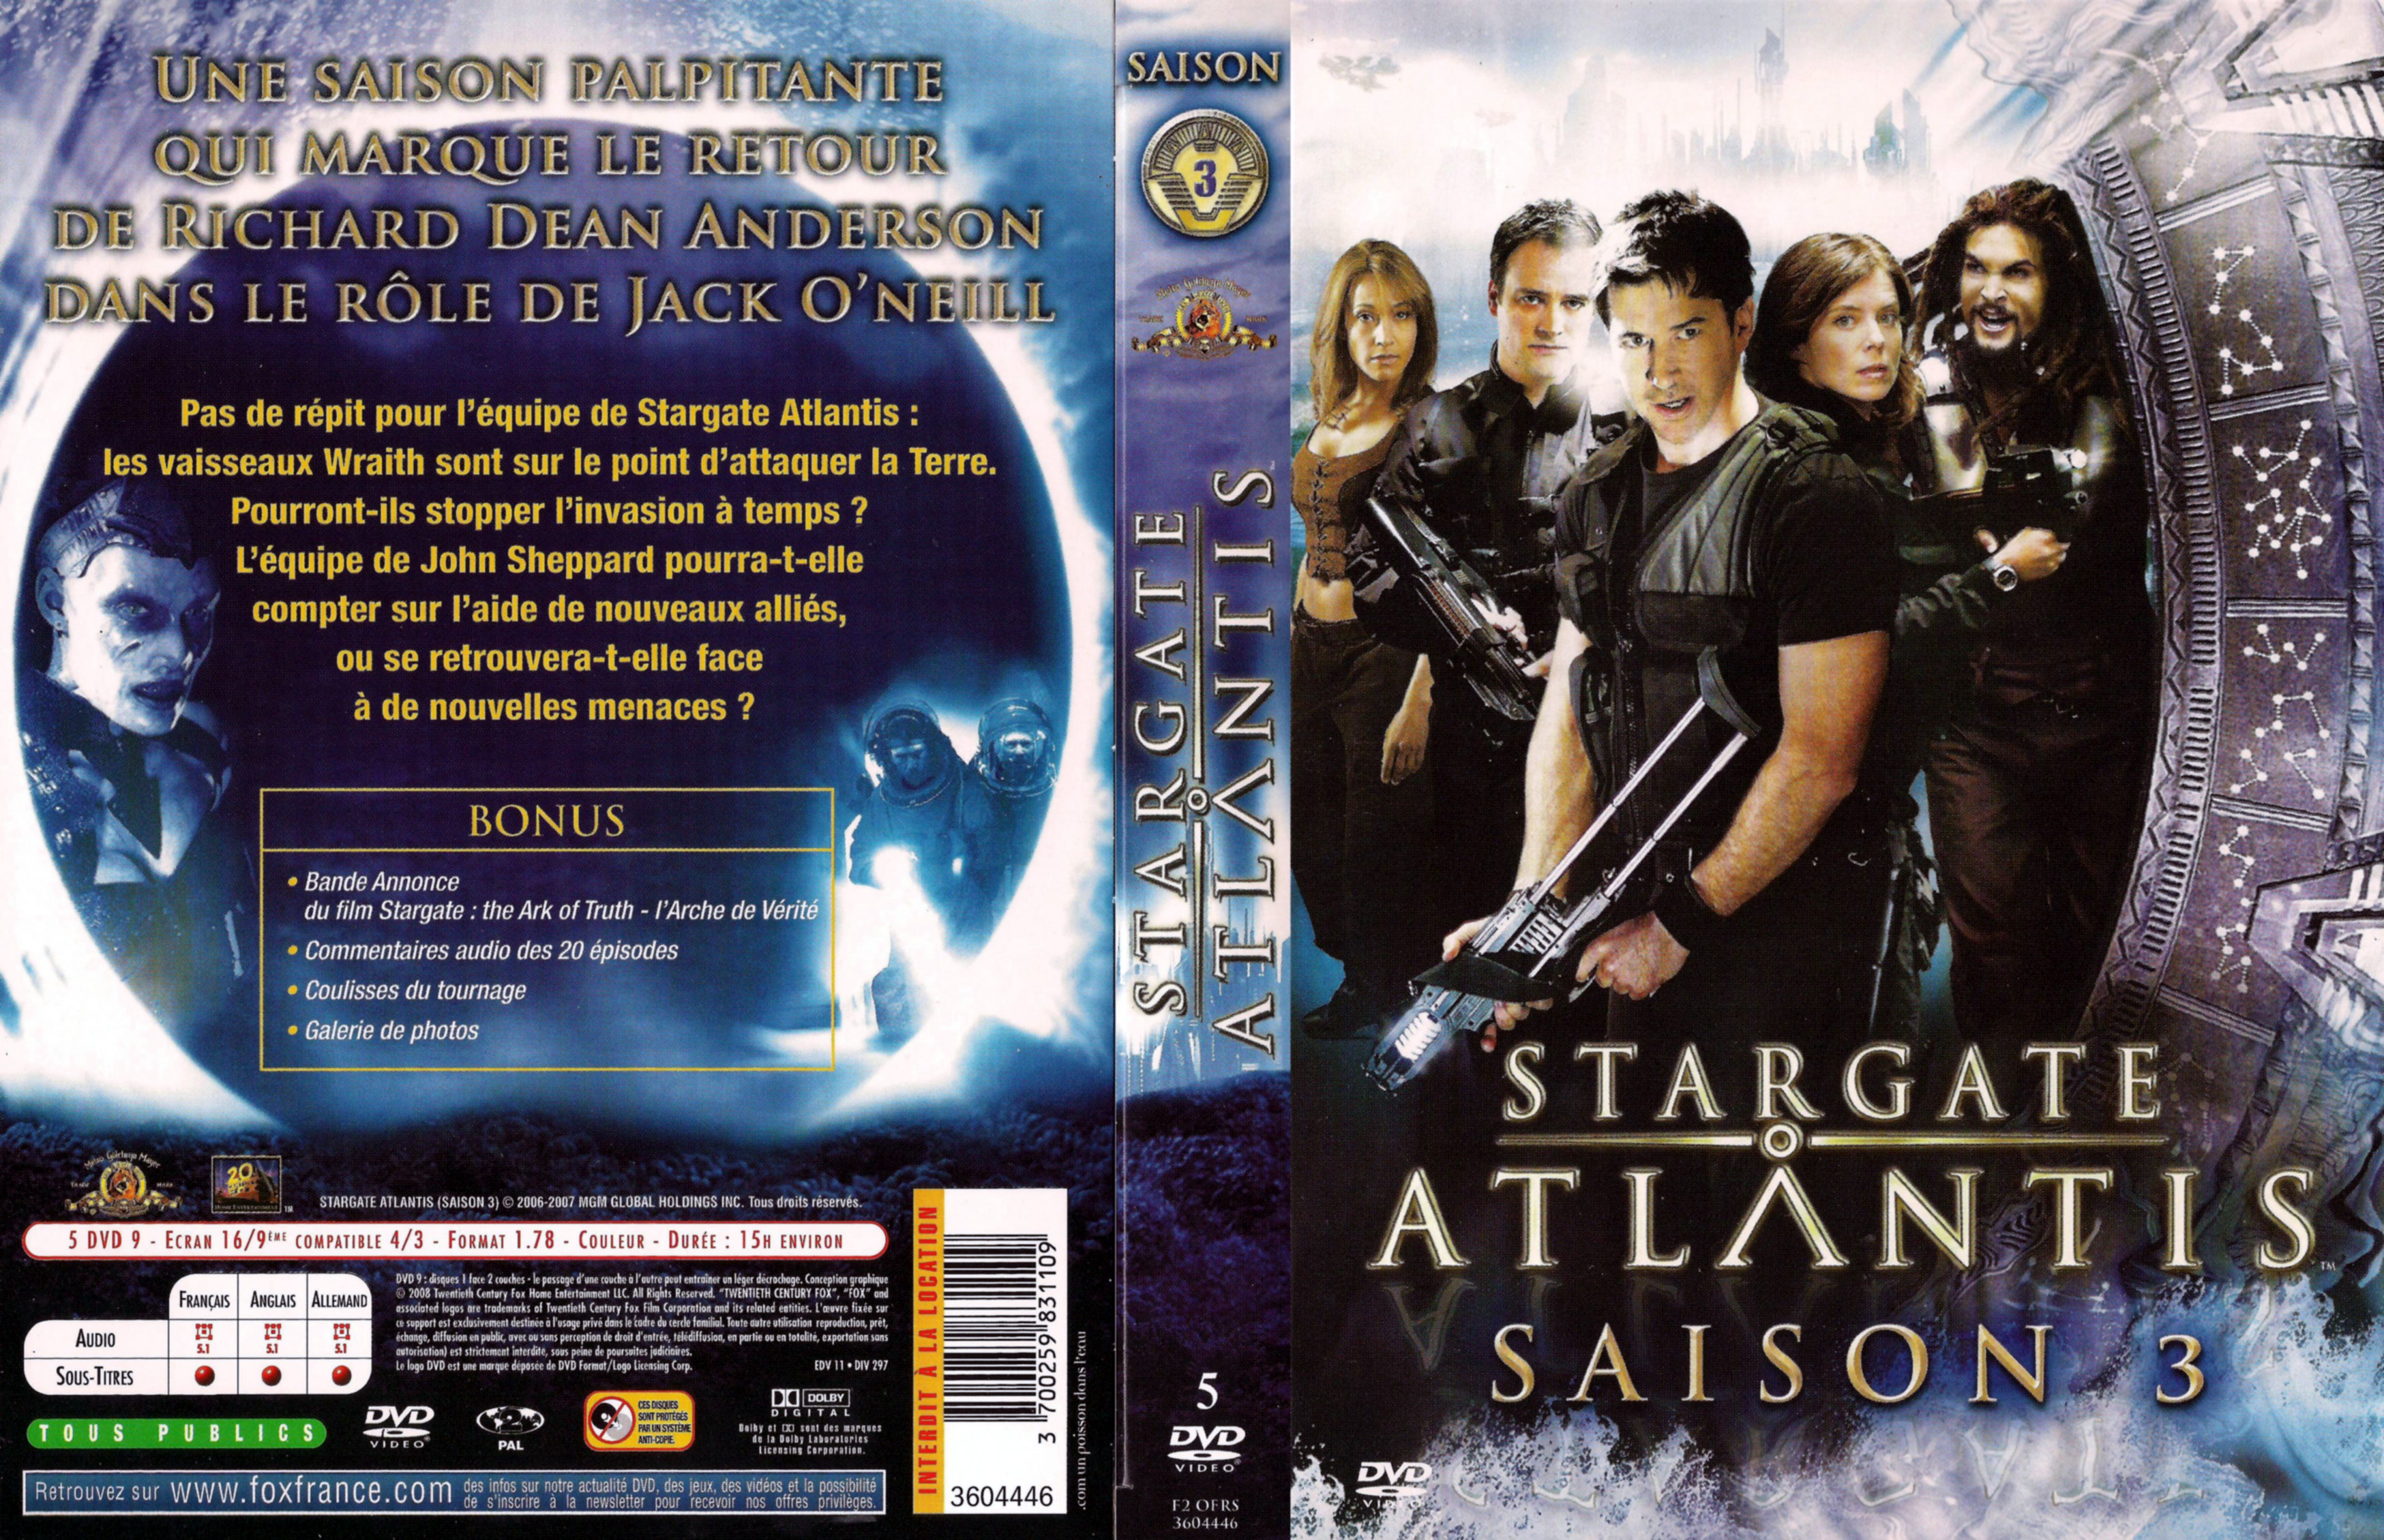 Jaquette DVD Stargate atlantis saison 3 COFFRET v2